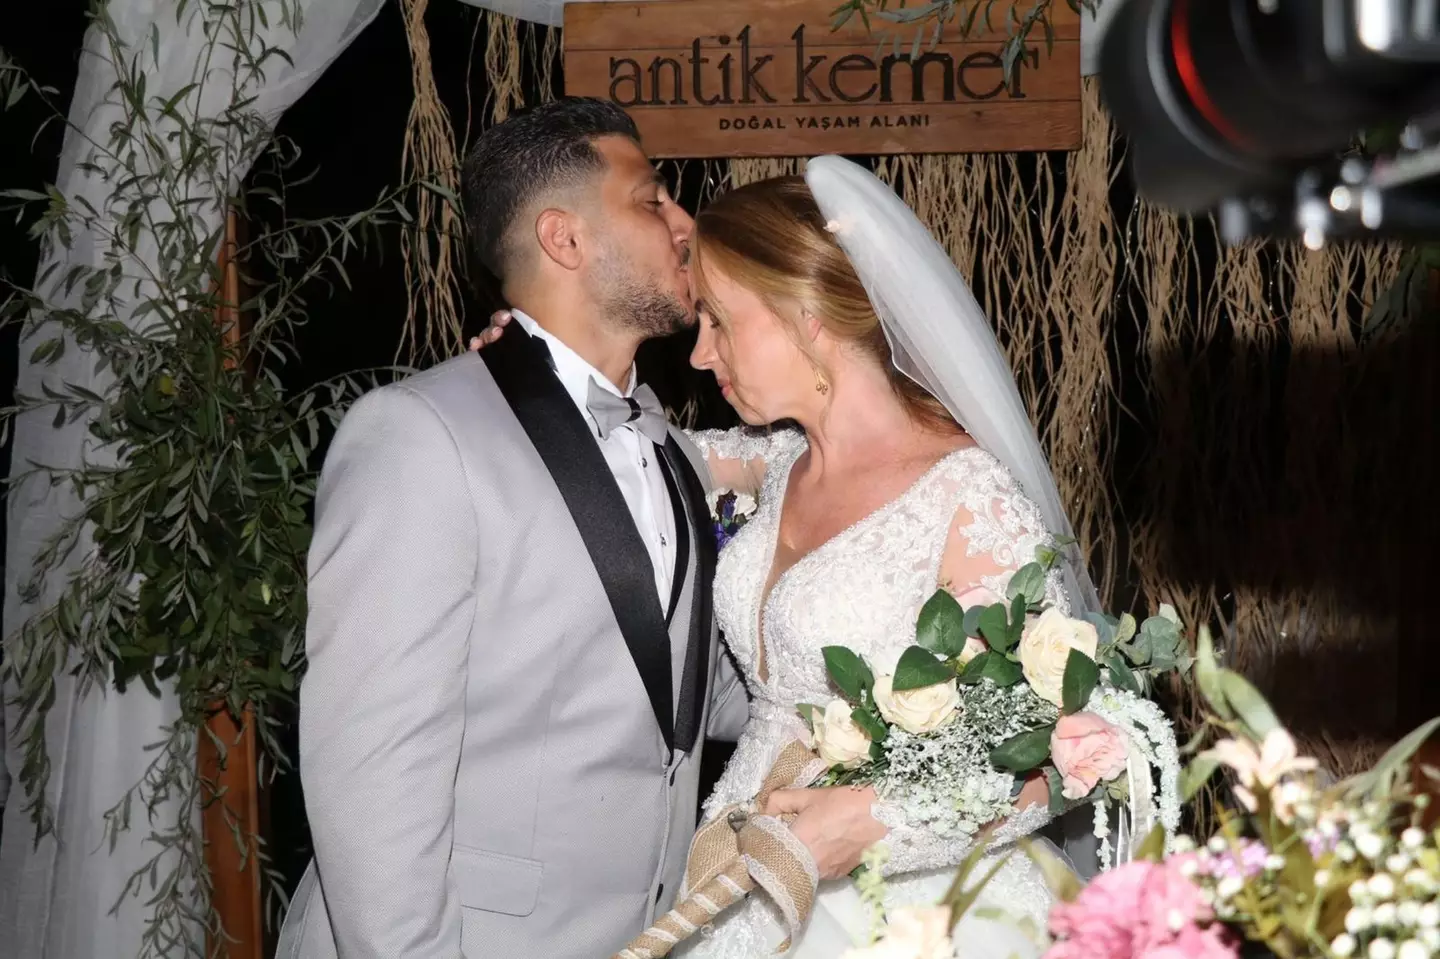 The couple married in Kusadasi, Turkey.